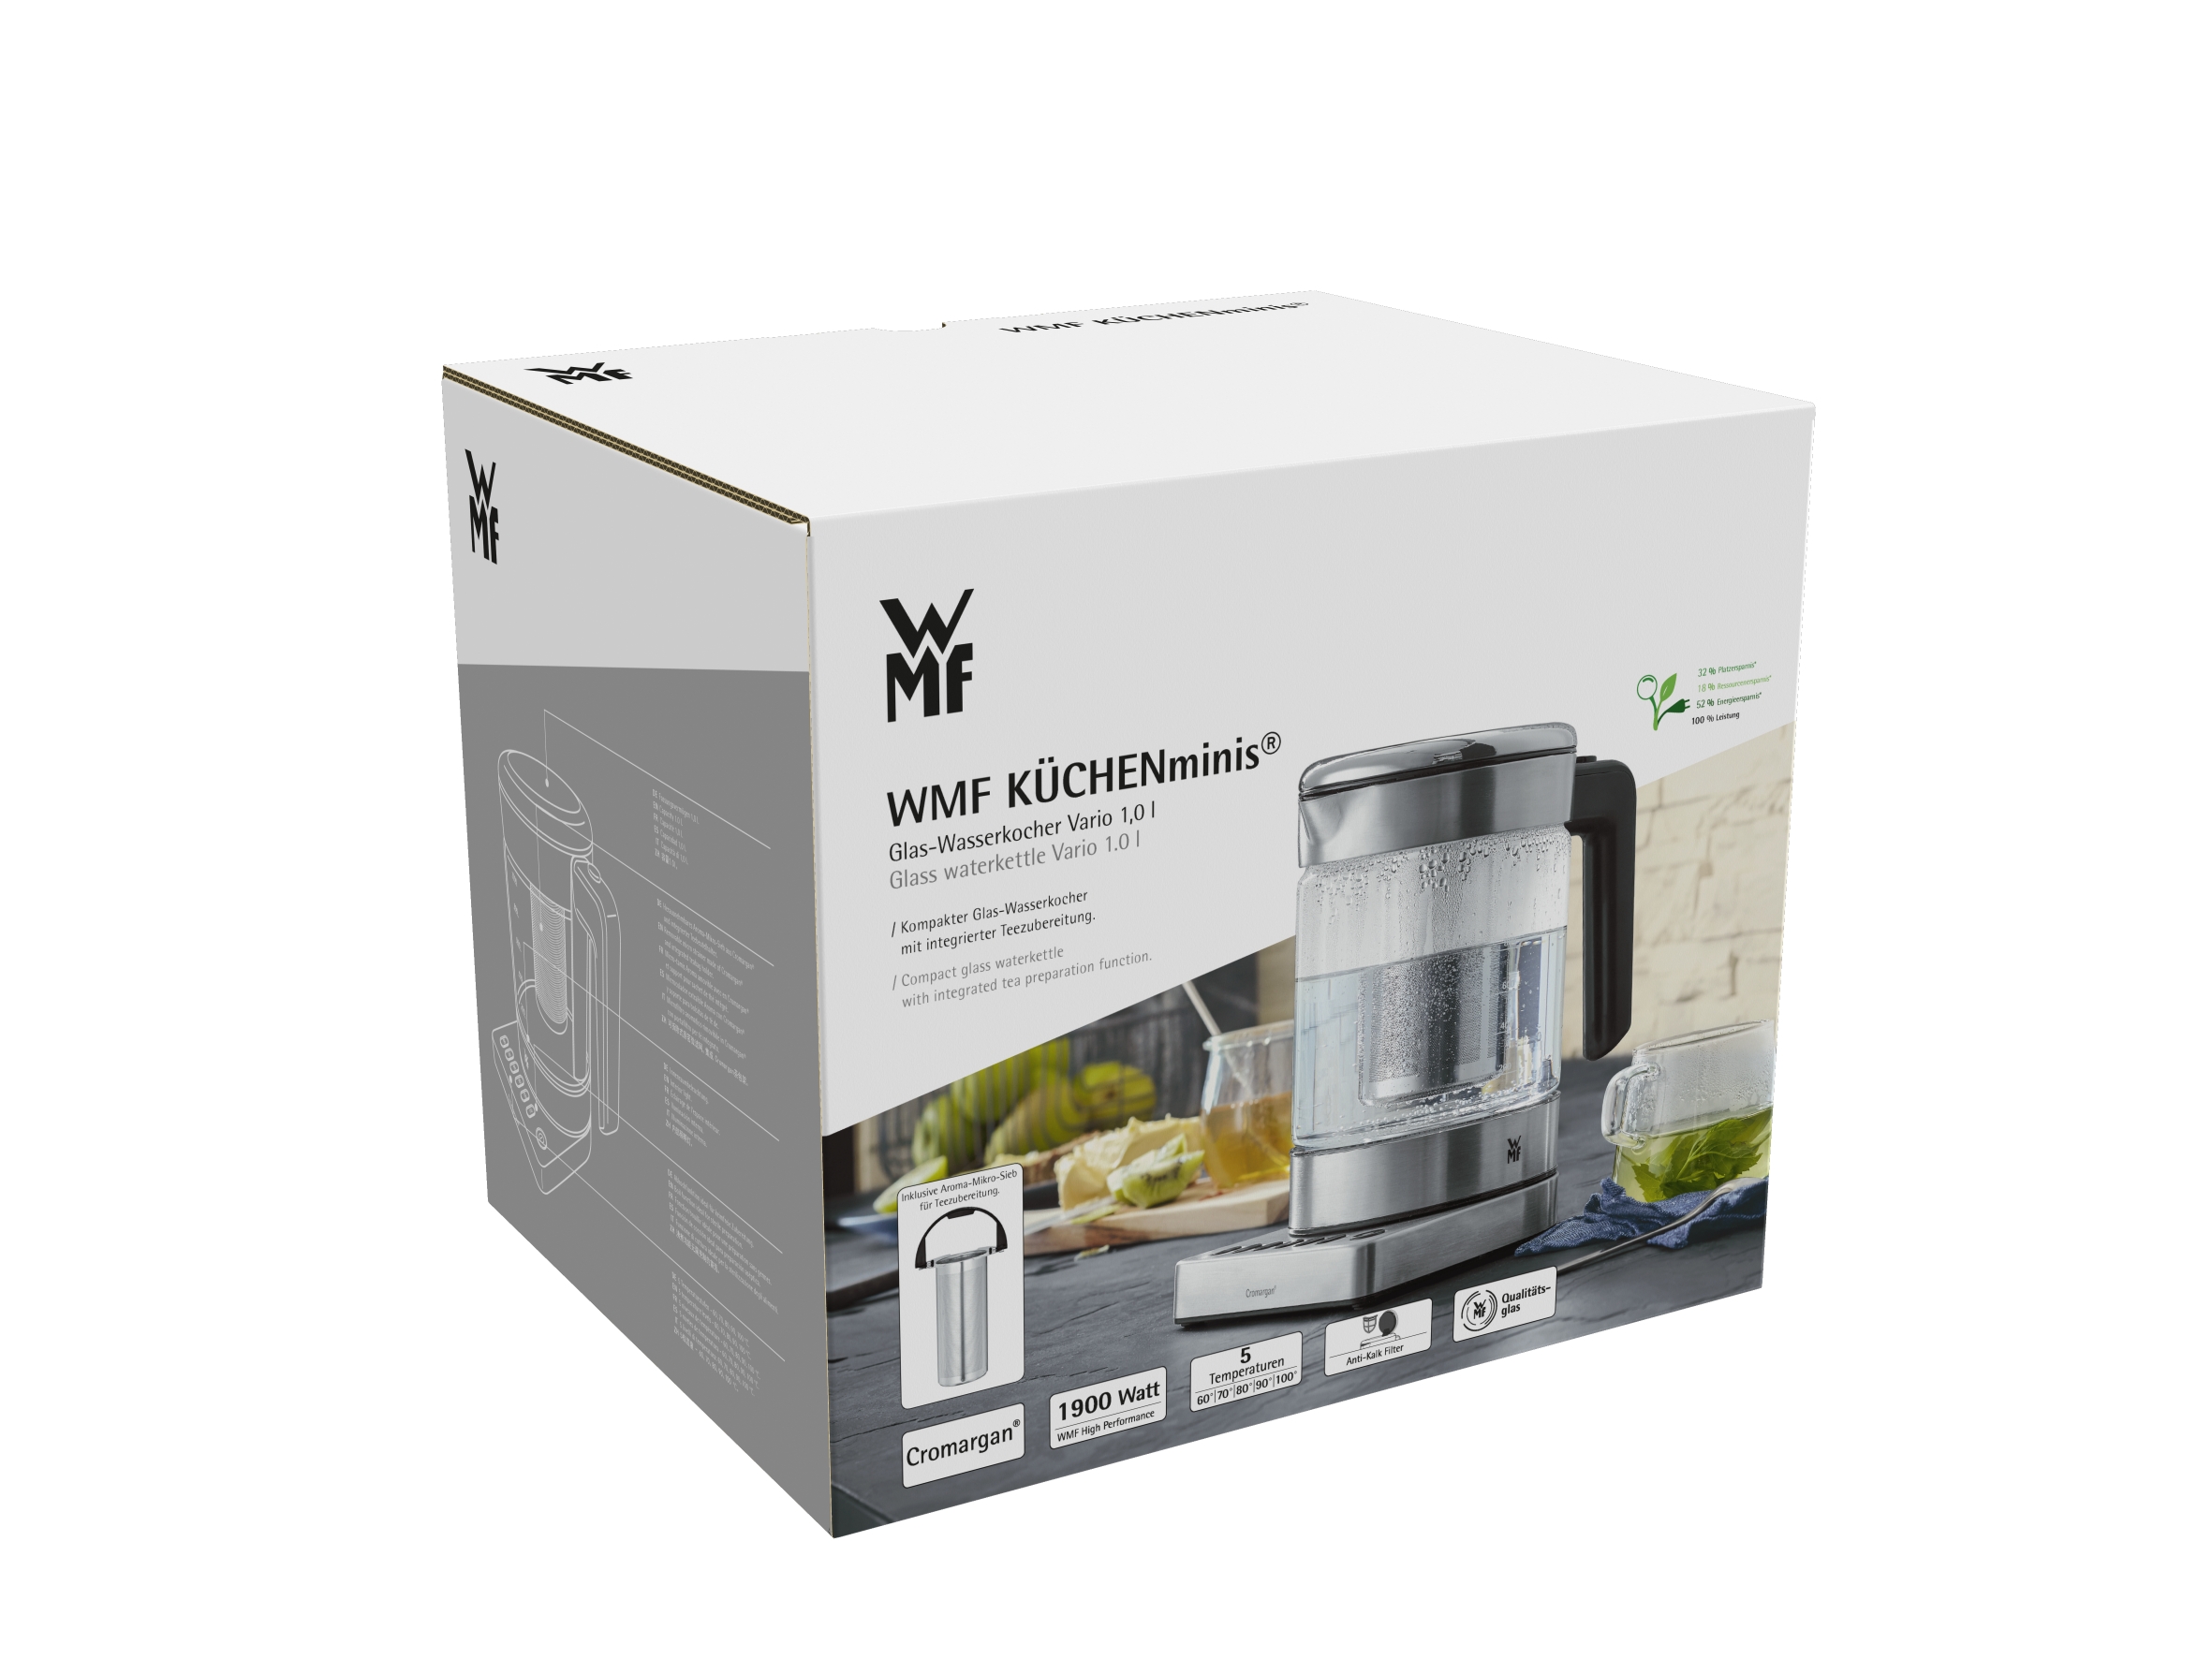 WMF KITCHENminisⓇ Su Isıtıcısı + Çay Makinesi - 1 lt